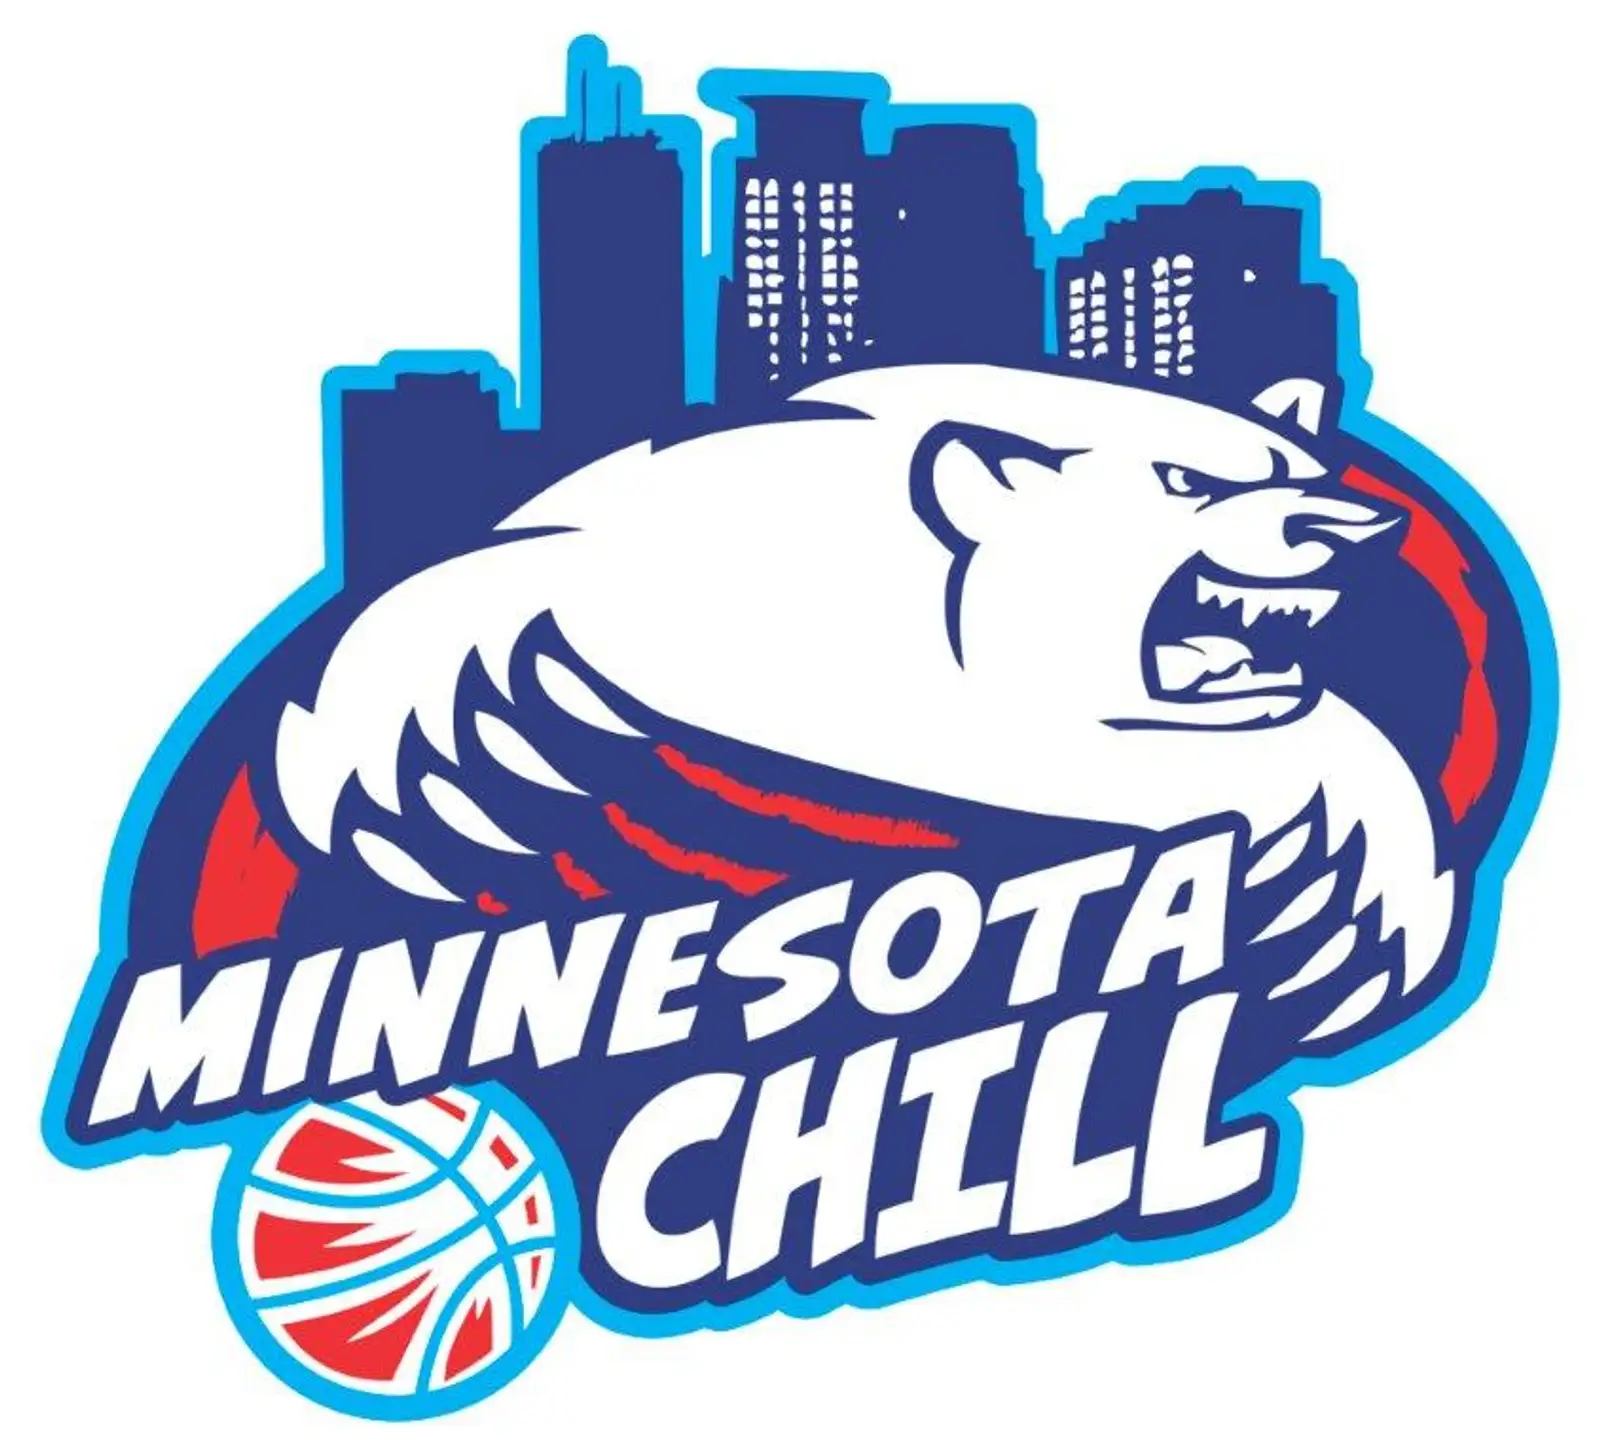 Minnesota Chill logo